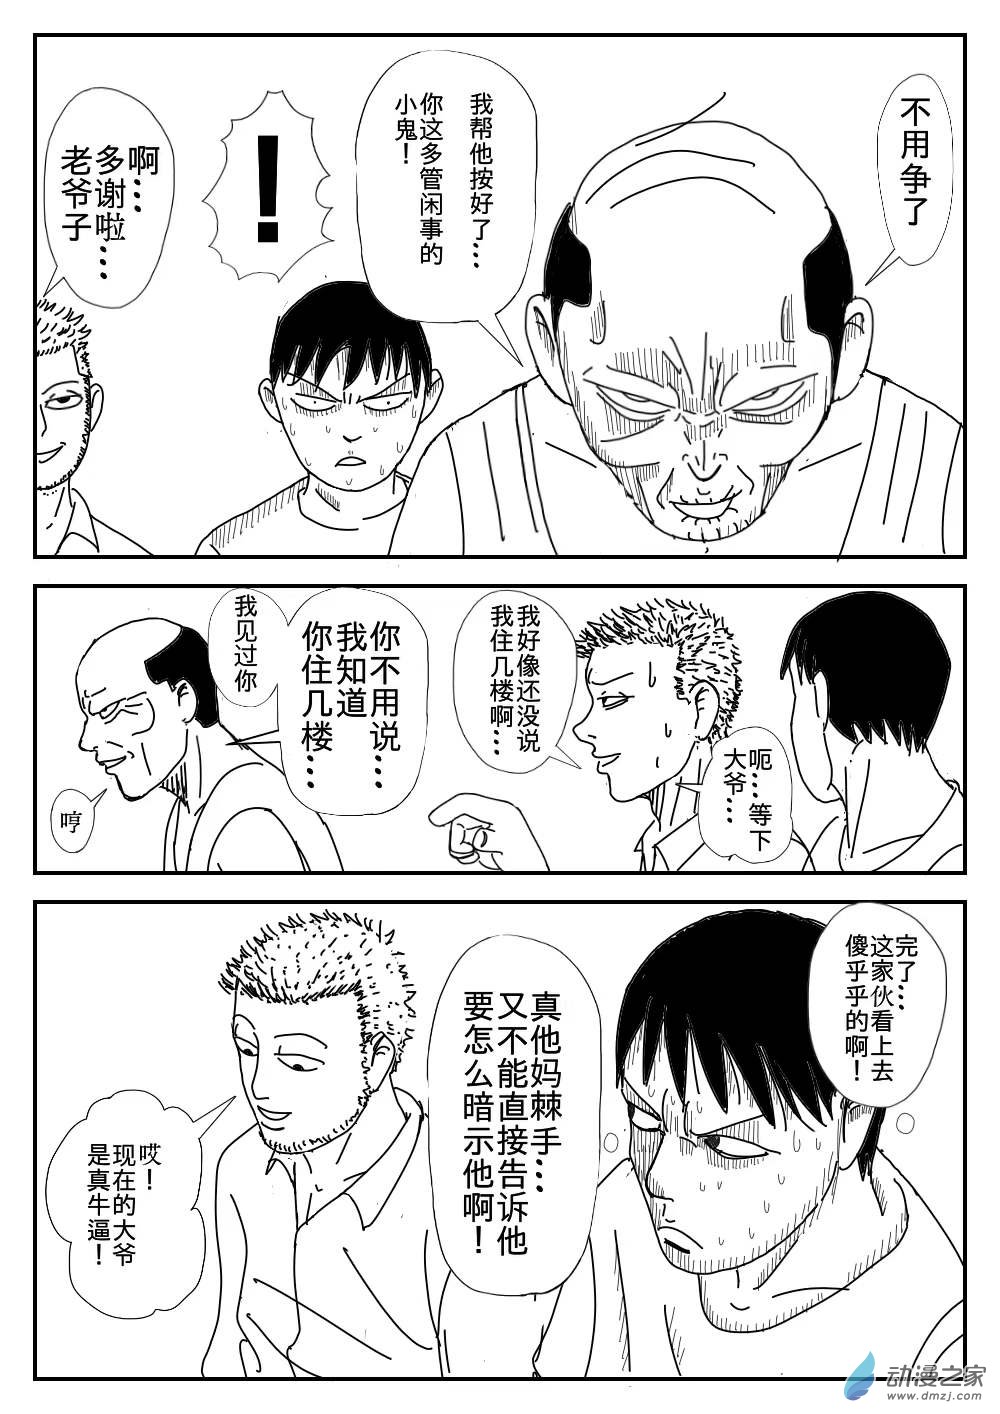 K神的短篇漫畫集 - 02 道格先生 - 3